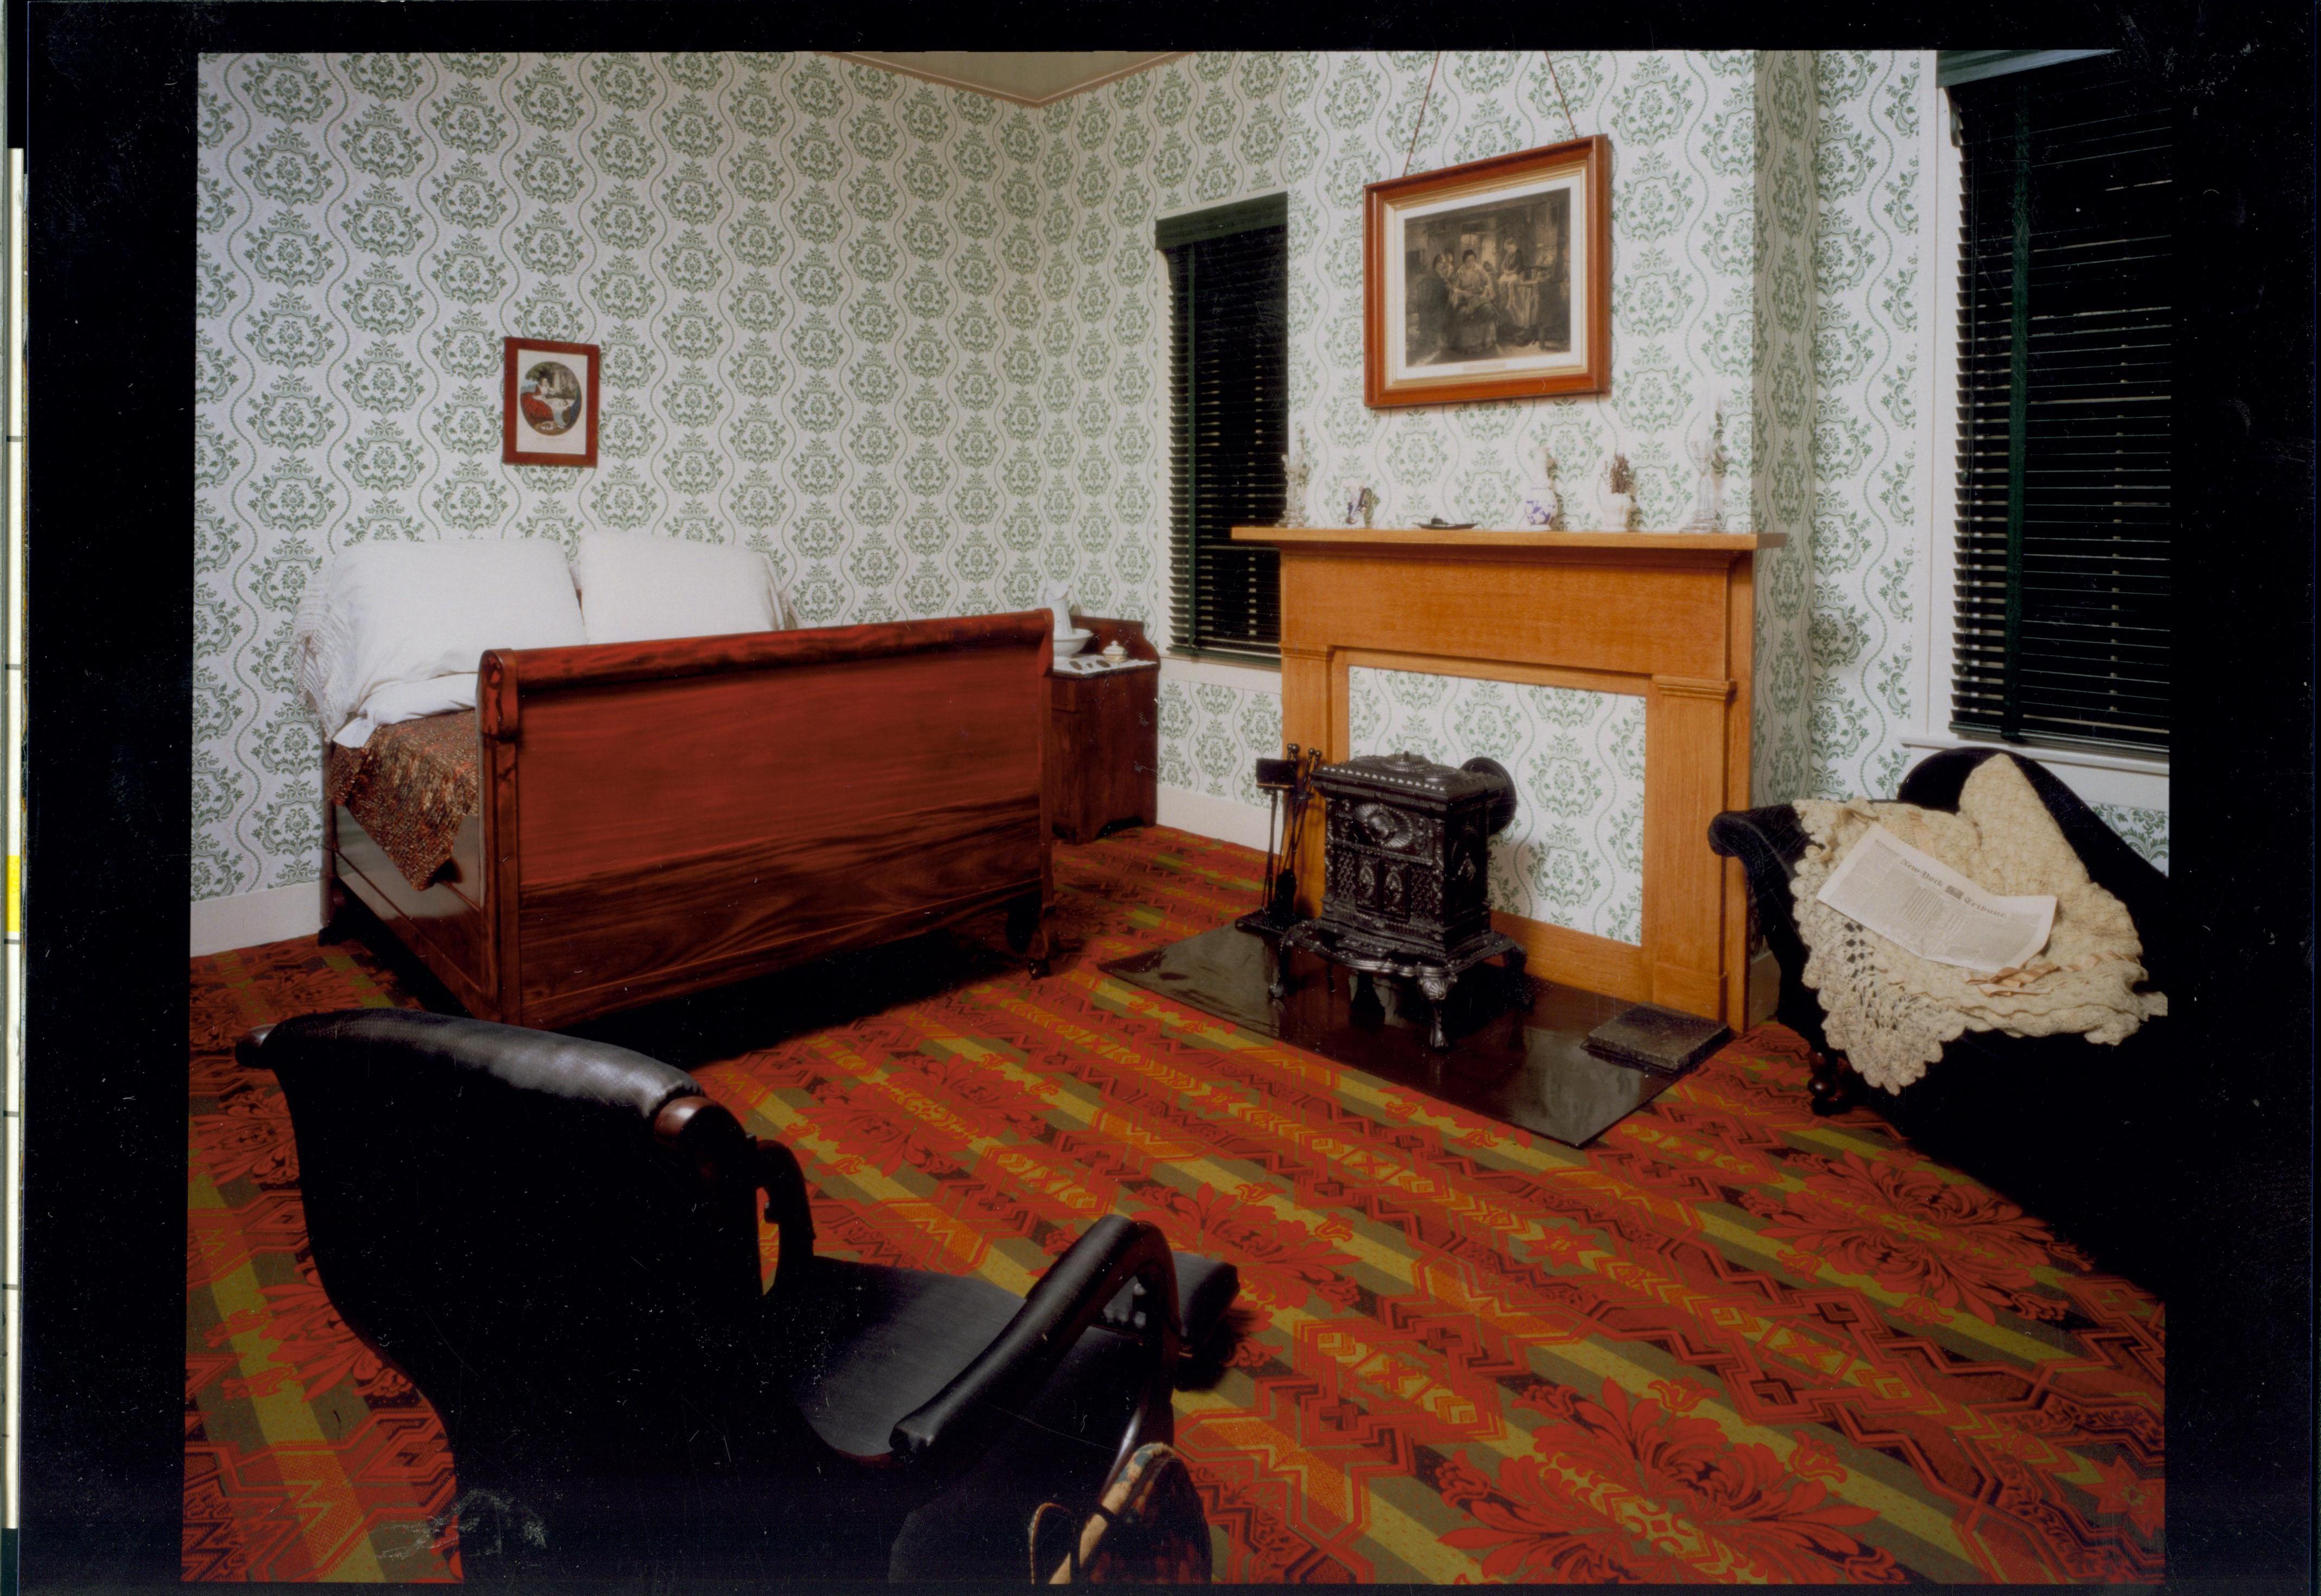 Guest Room Job#44298,PG45,PIC3 Lincoln Home, Restoration, Guest Room/Robert Lincoln's Room, Bedroom